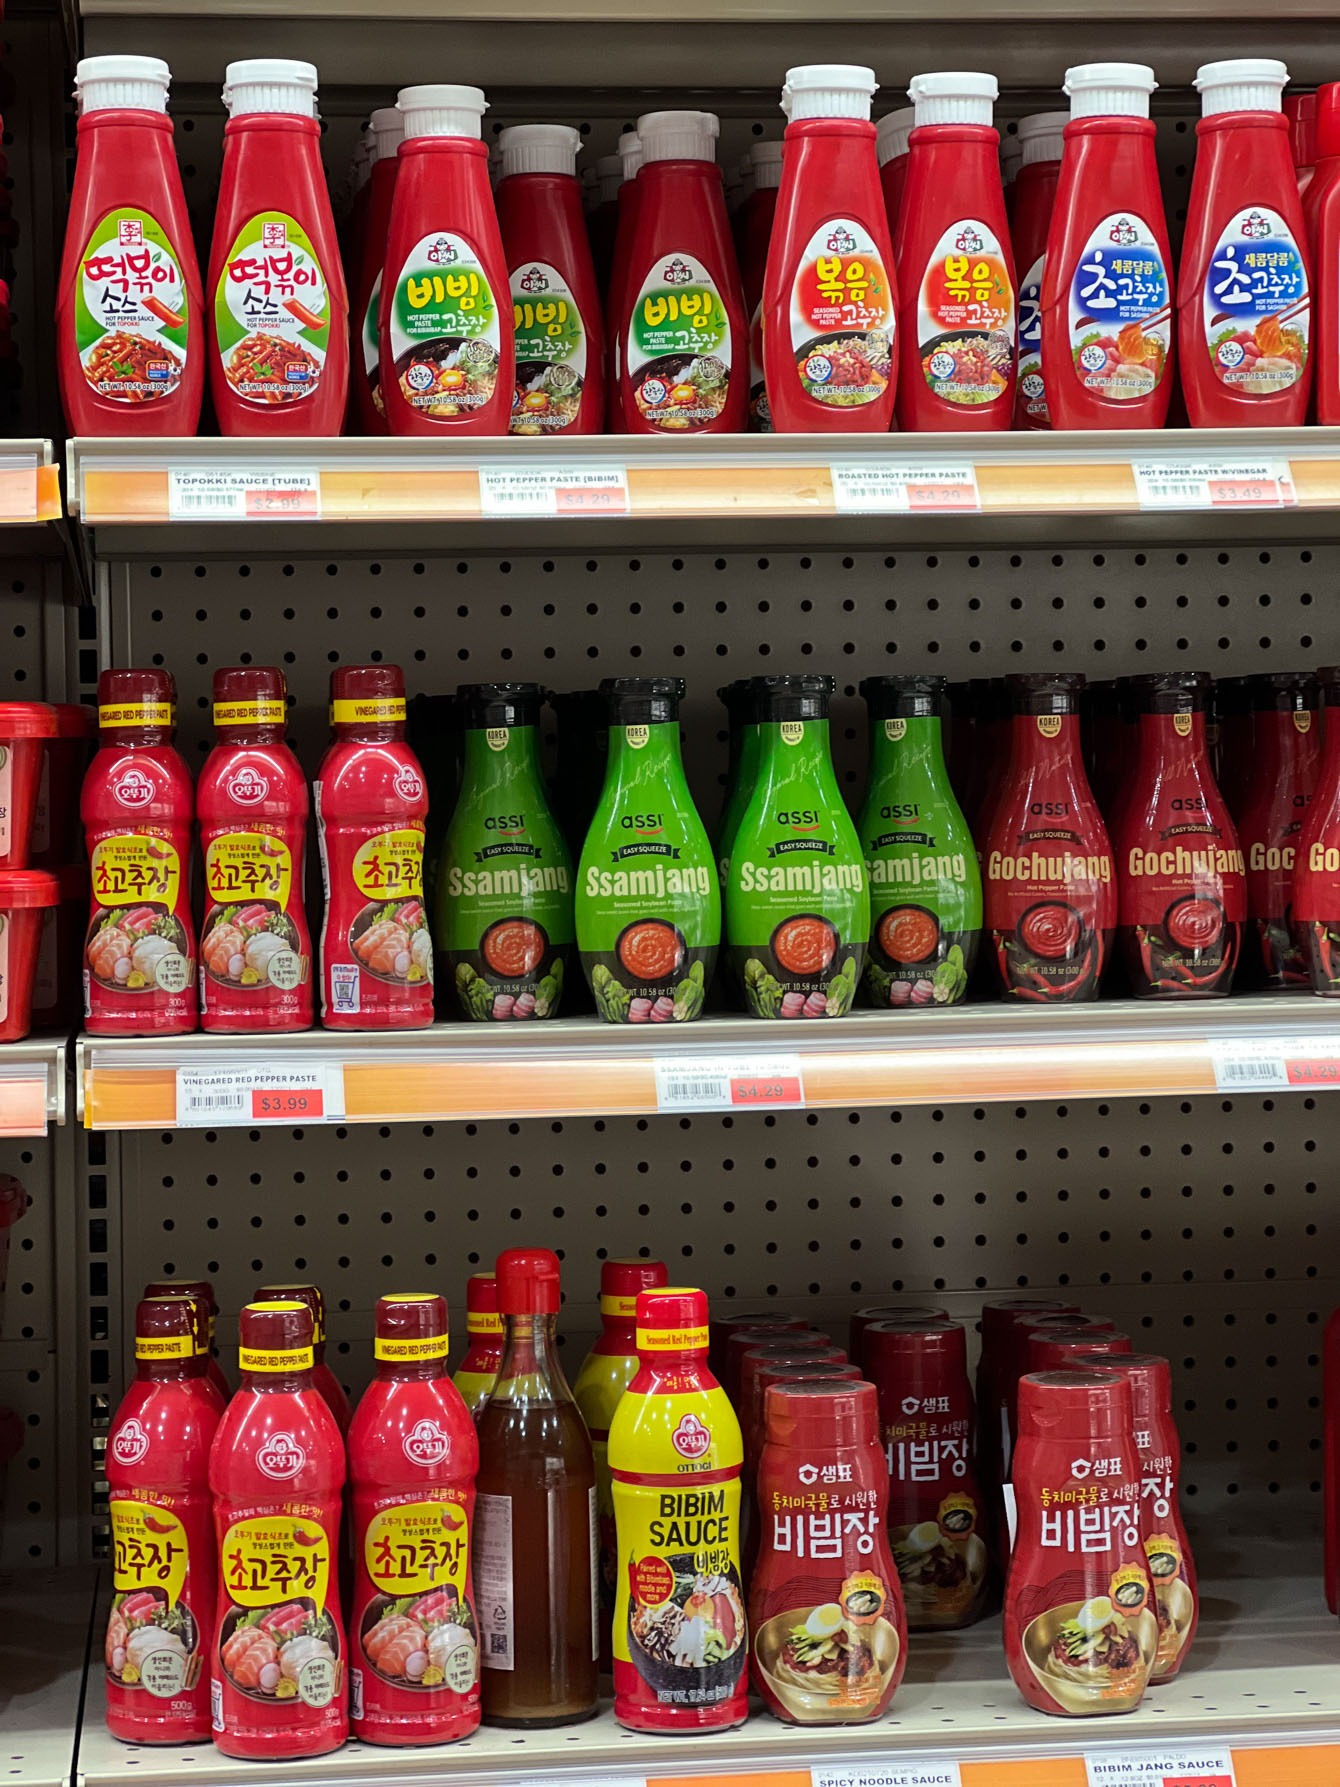 Commercially made seasoned gochujang is in bottles on the shelf